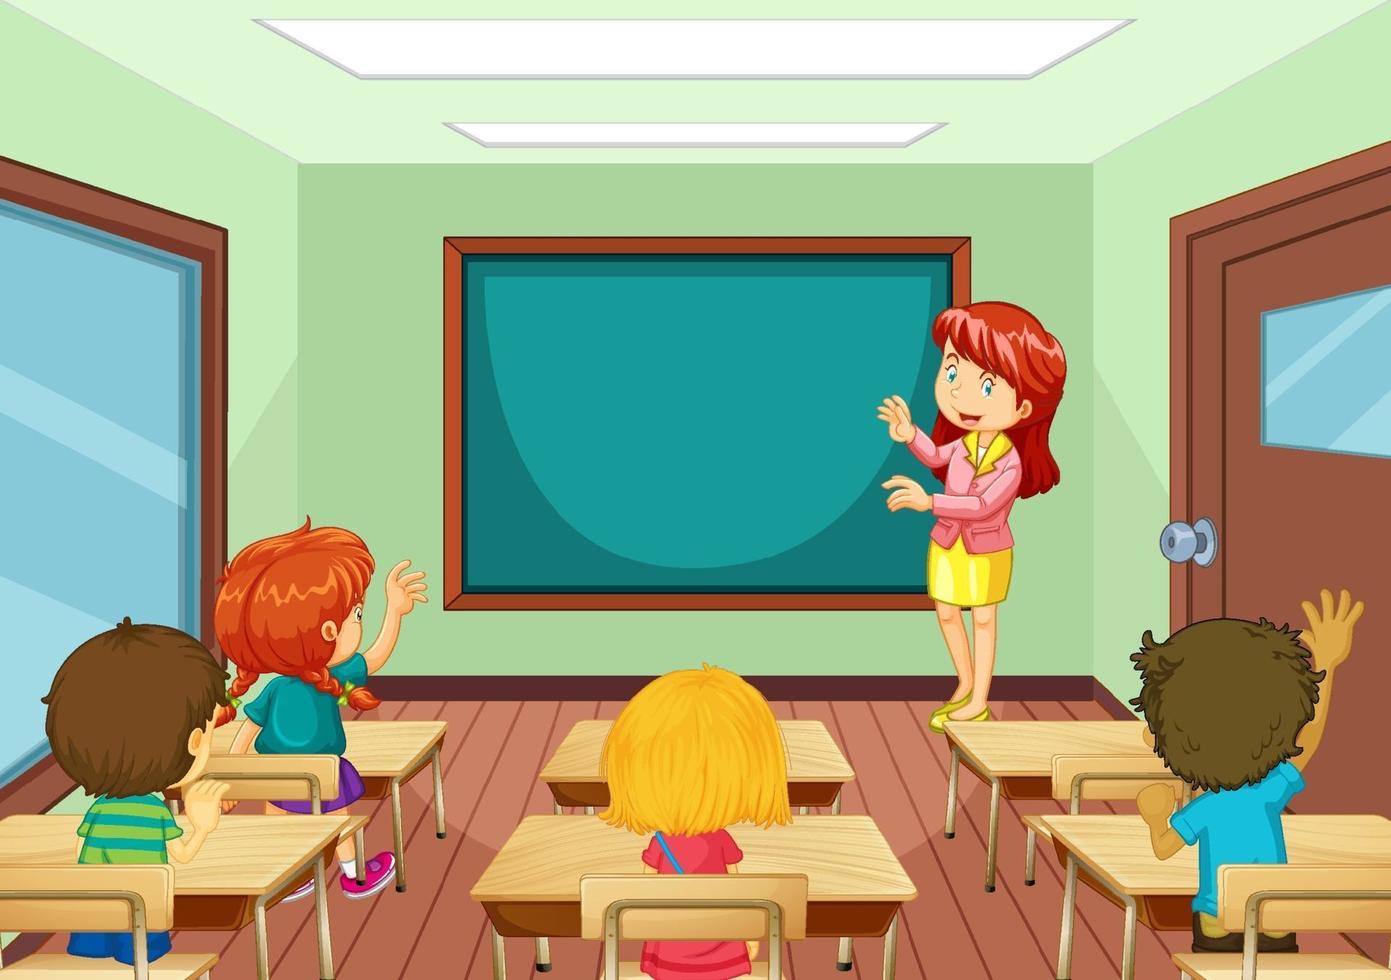 Teacher teaching students in the classroom scene vector